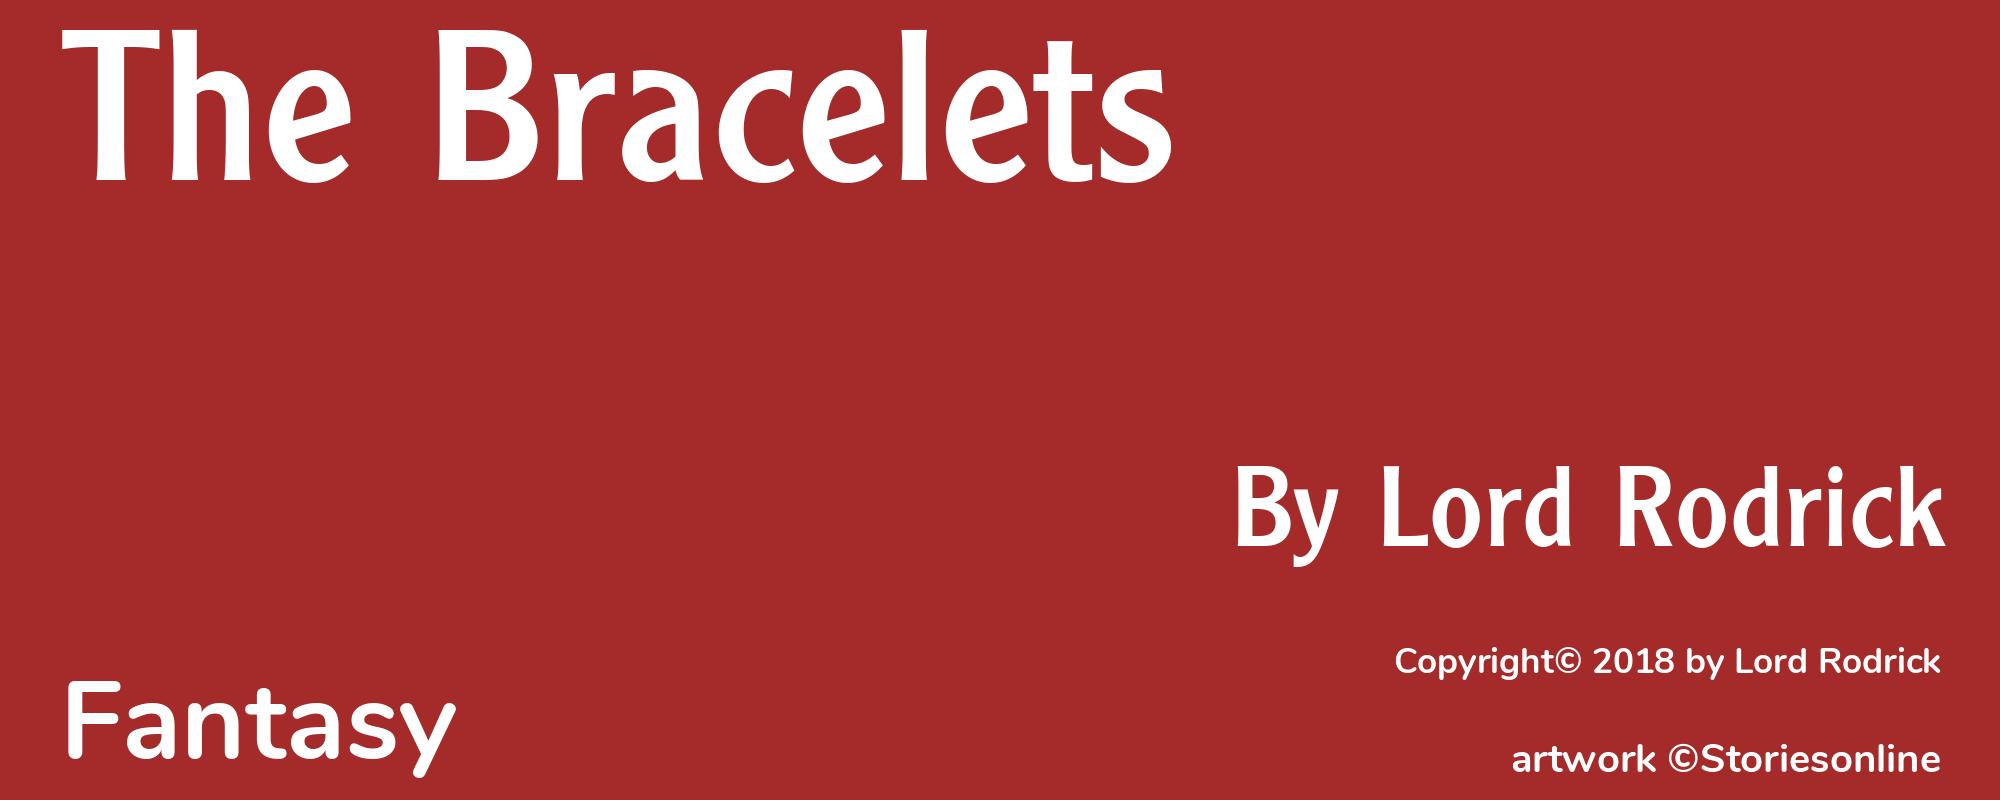 The Bracelets - Cover